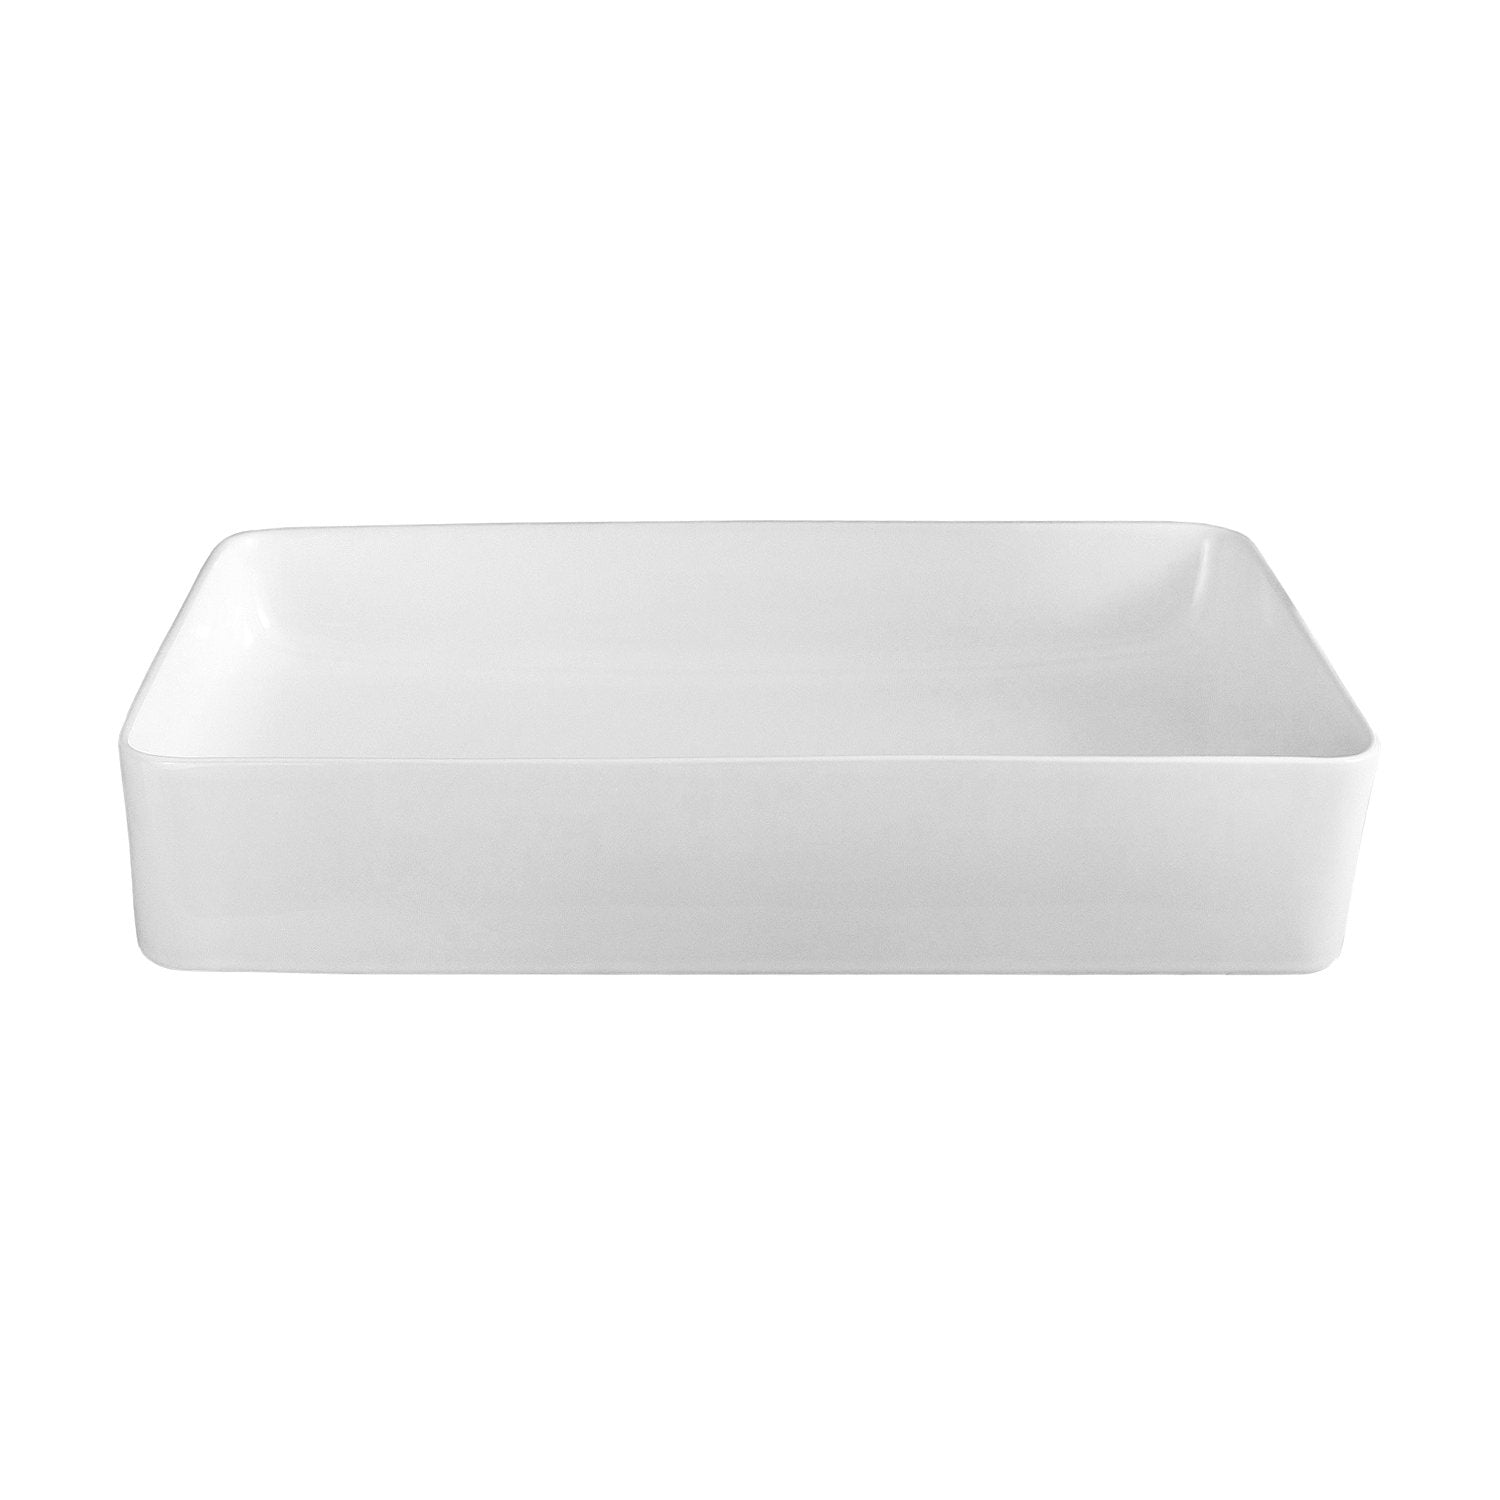 DAX Ceramic Rectangle Single Bowl Bathroom Vessel Sink, White Finish, 19 x 14-1/2 x 5 Inches (BSN-285B)